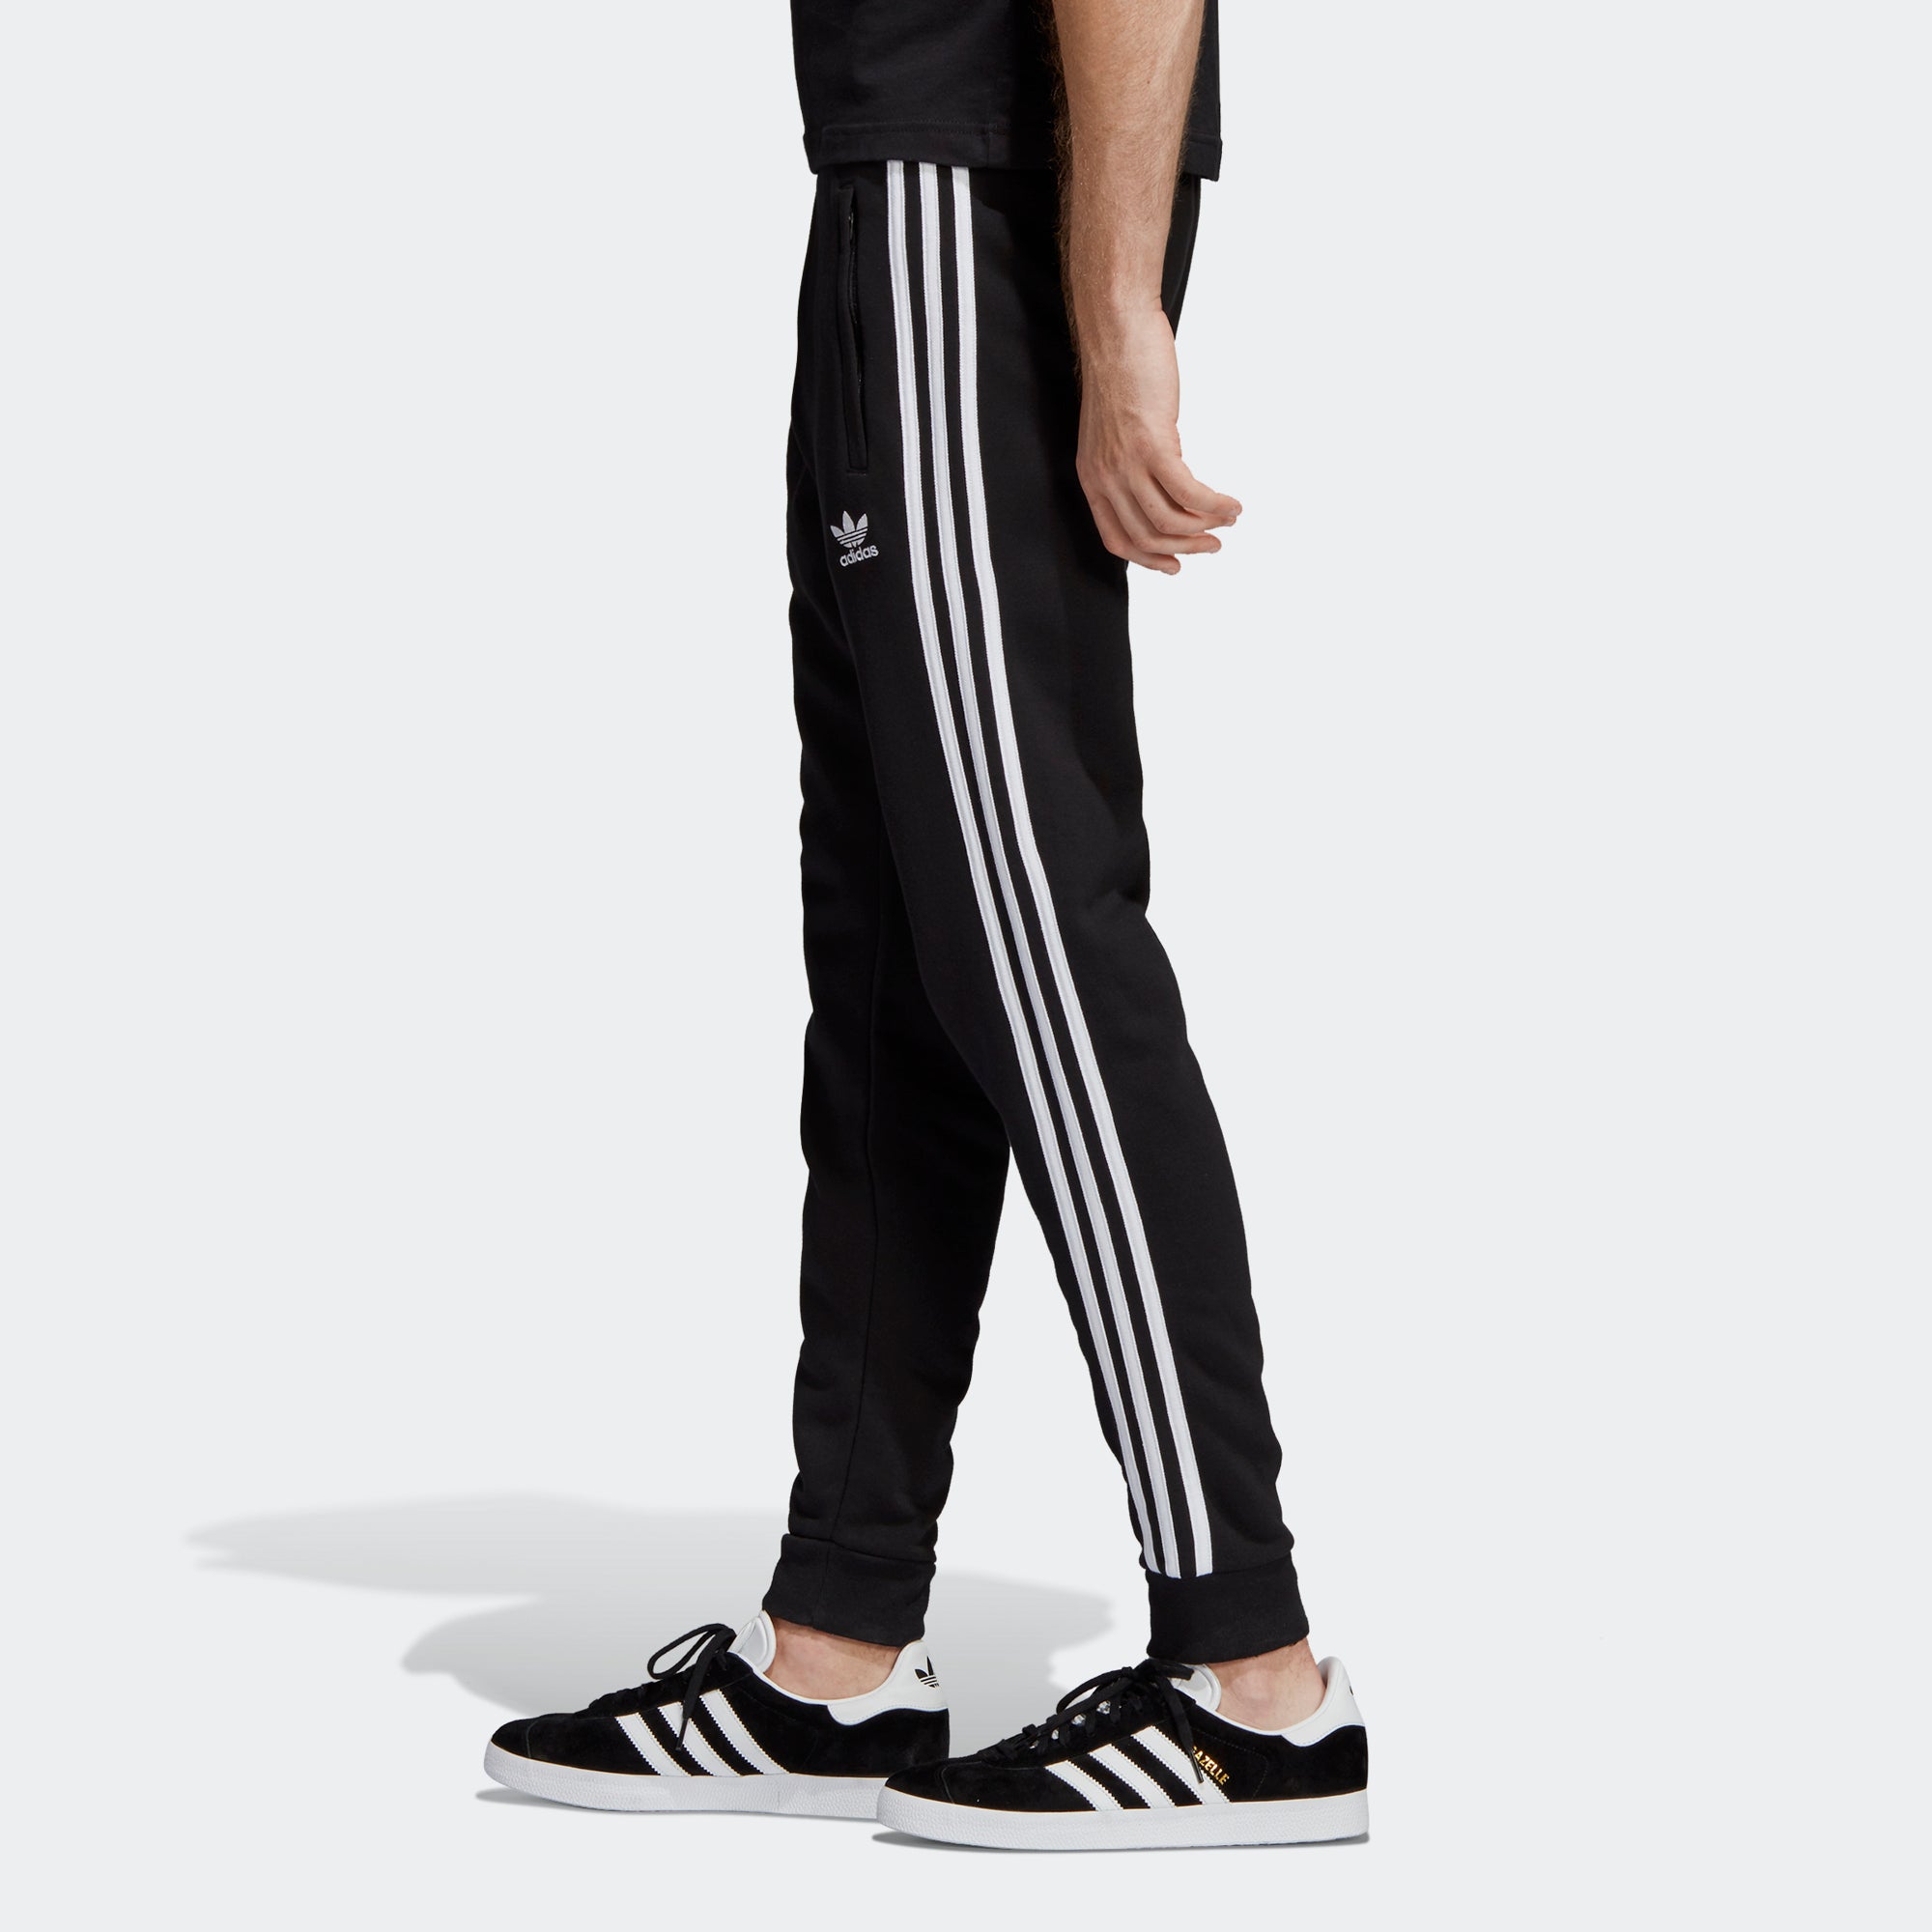 adidas striped pants mens